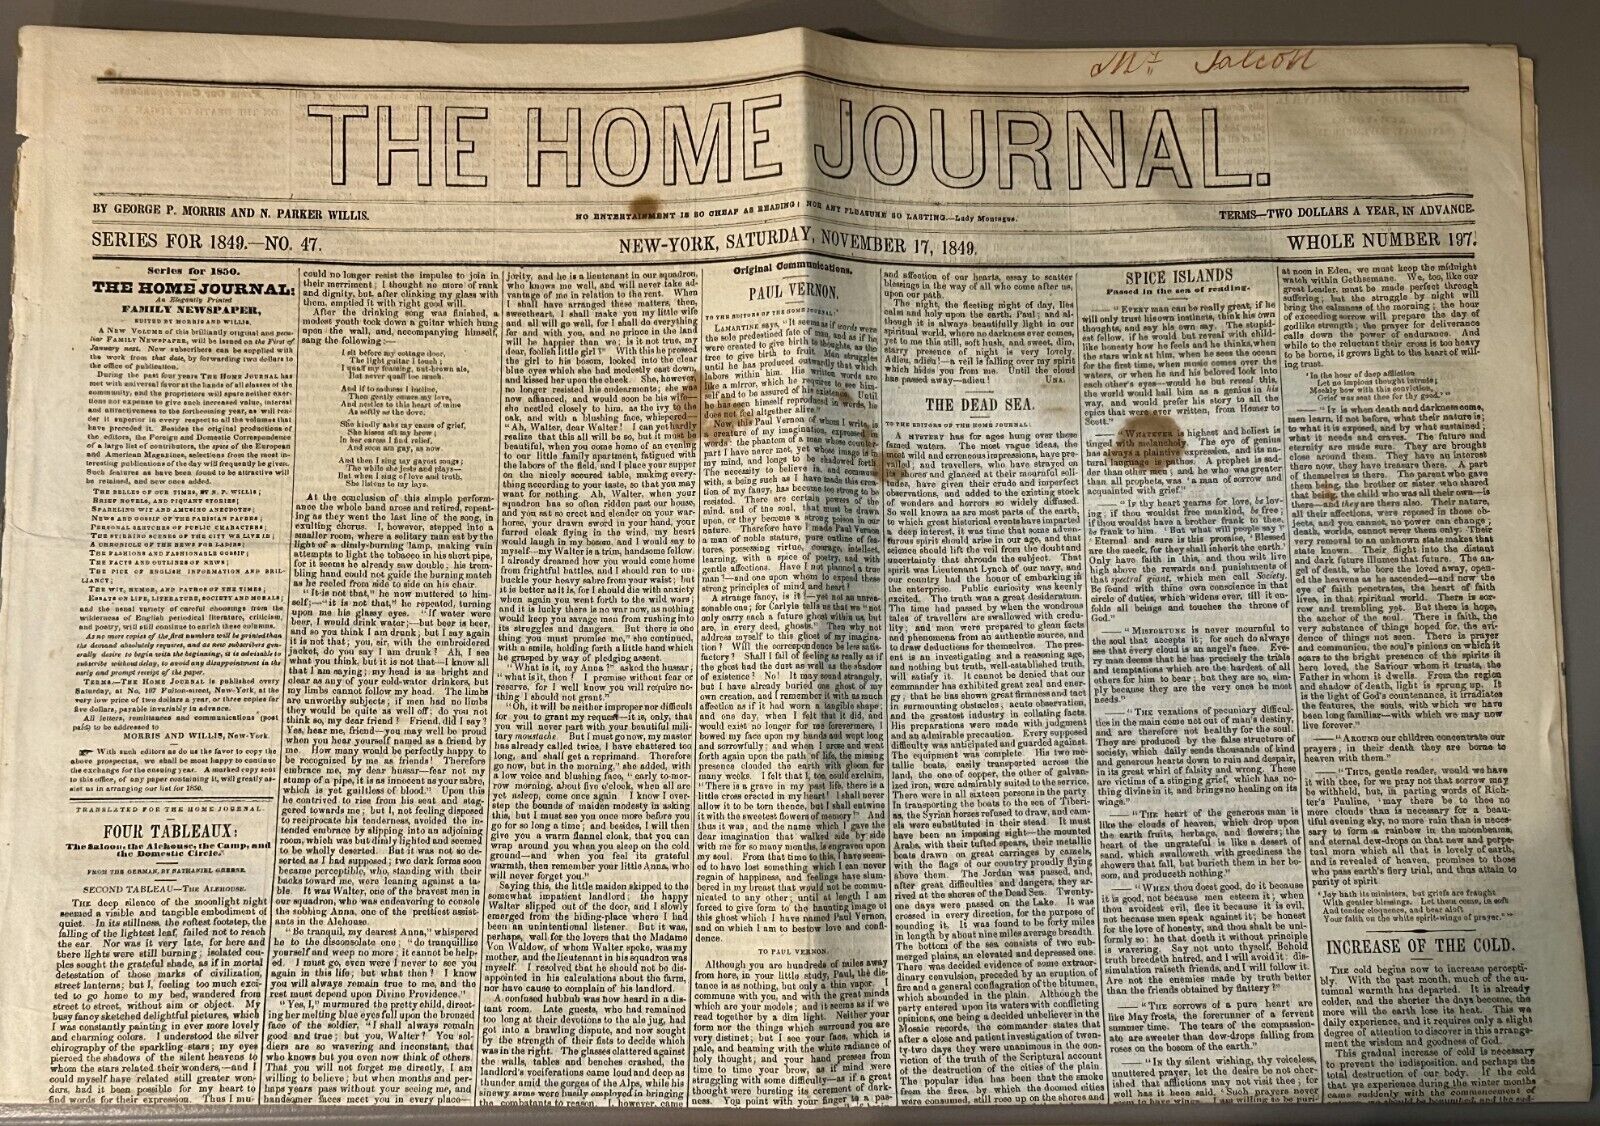 The Home Journal - November 17, 1849 - New York Poetry, Advertising, Stories